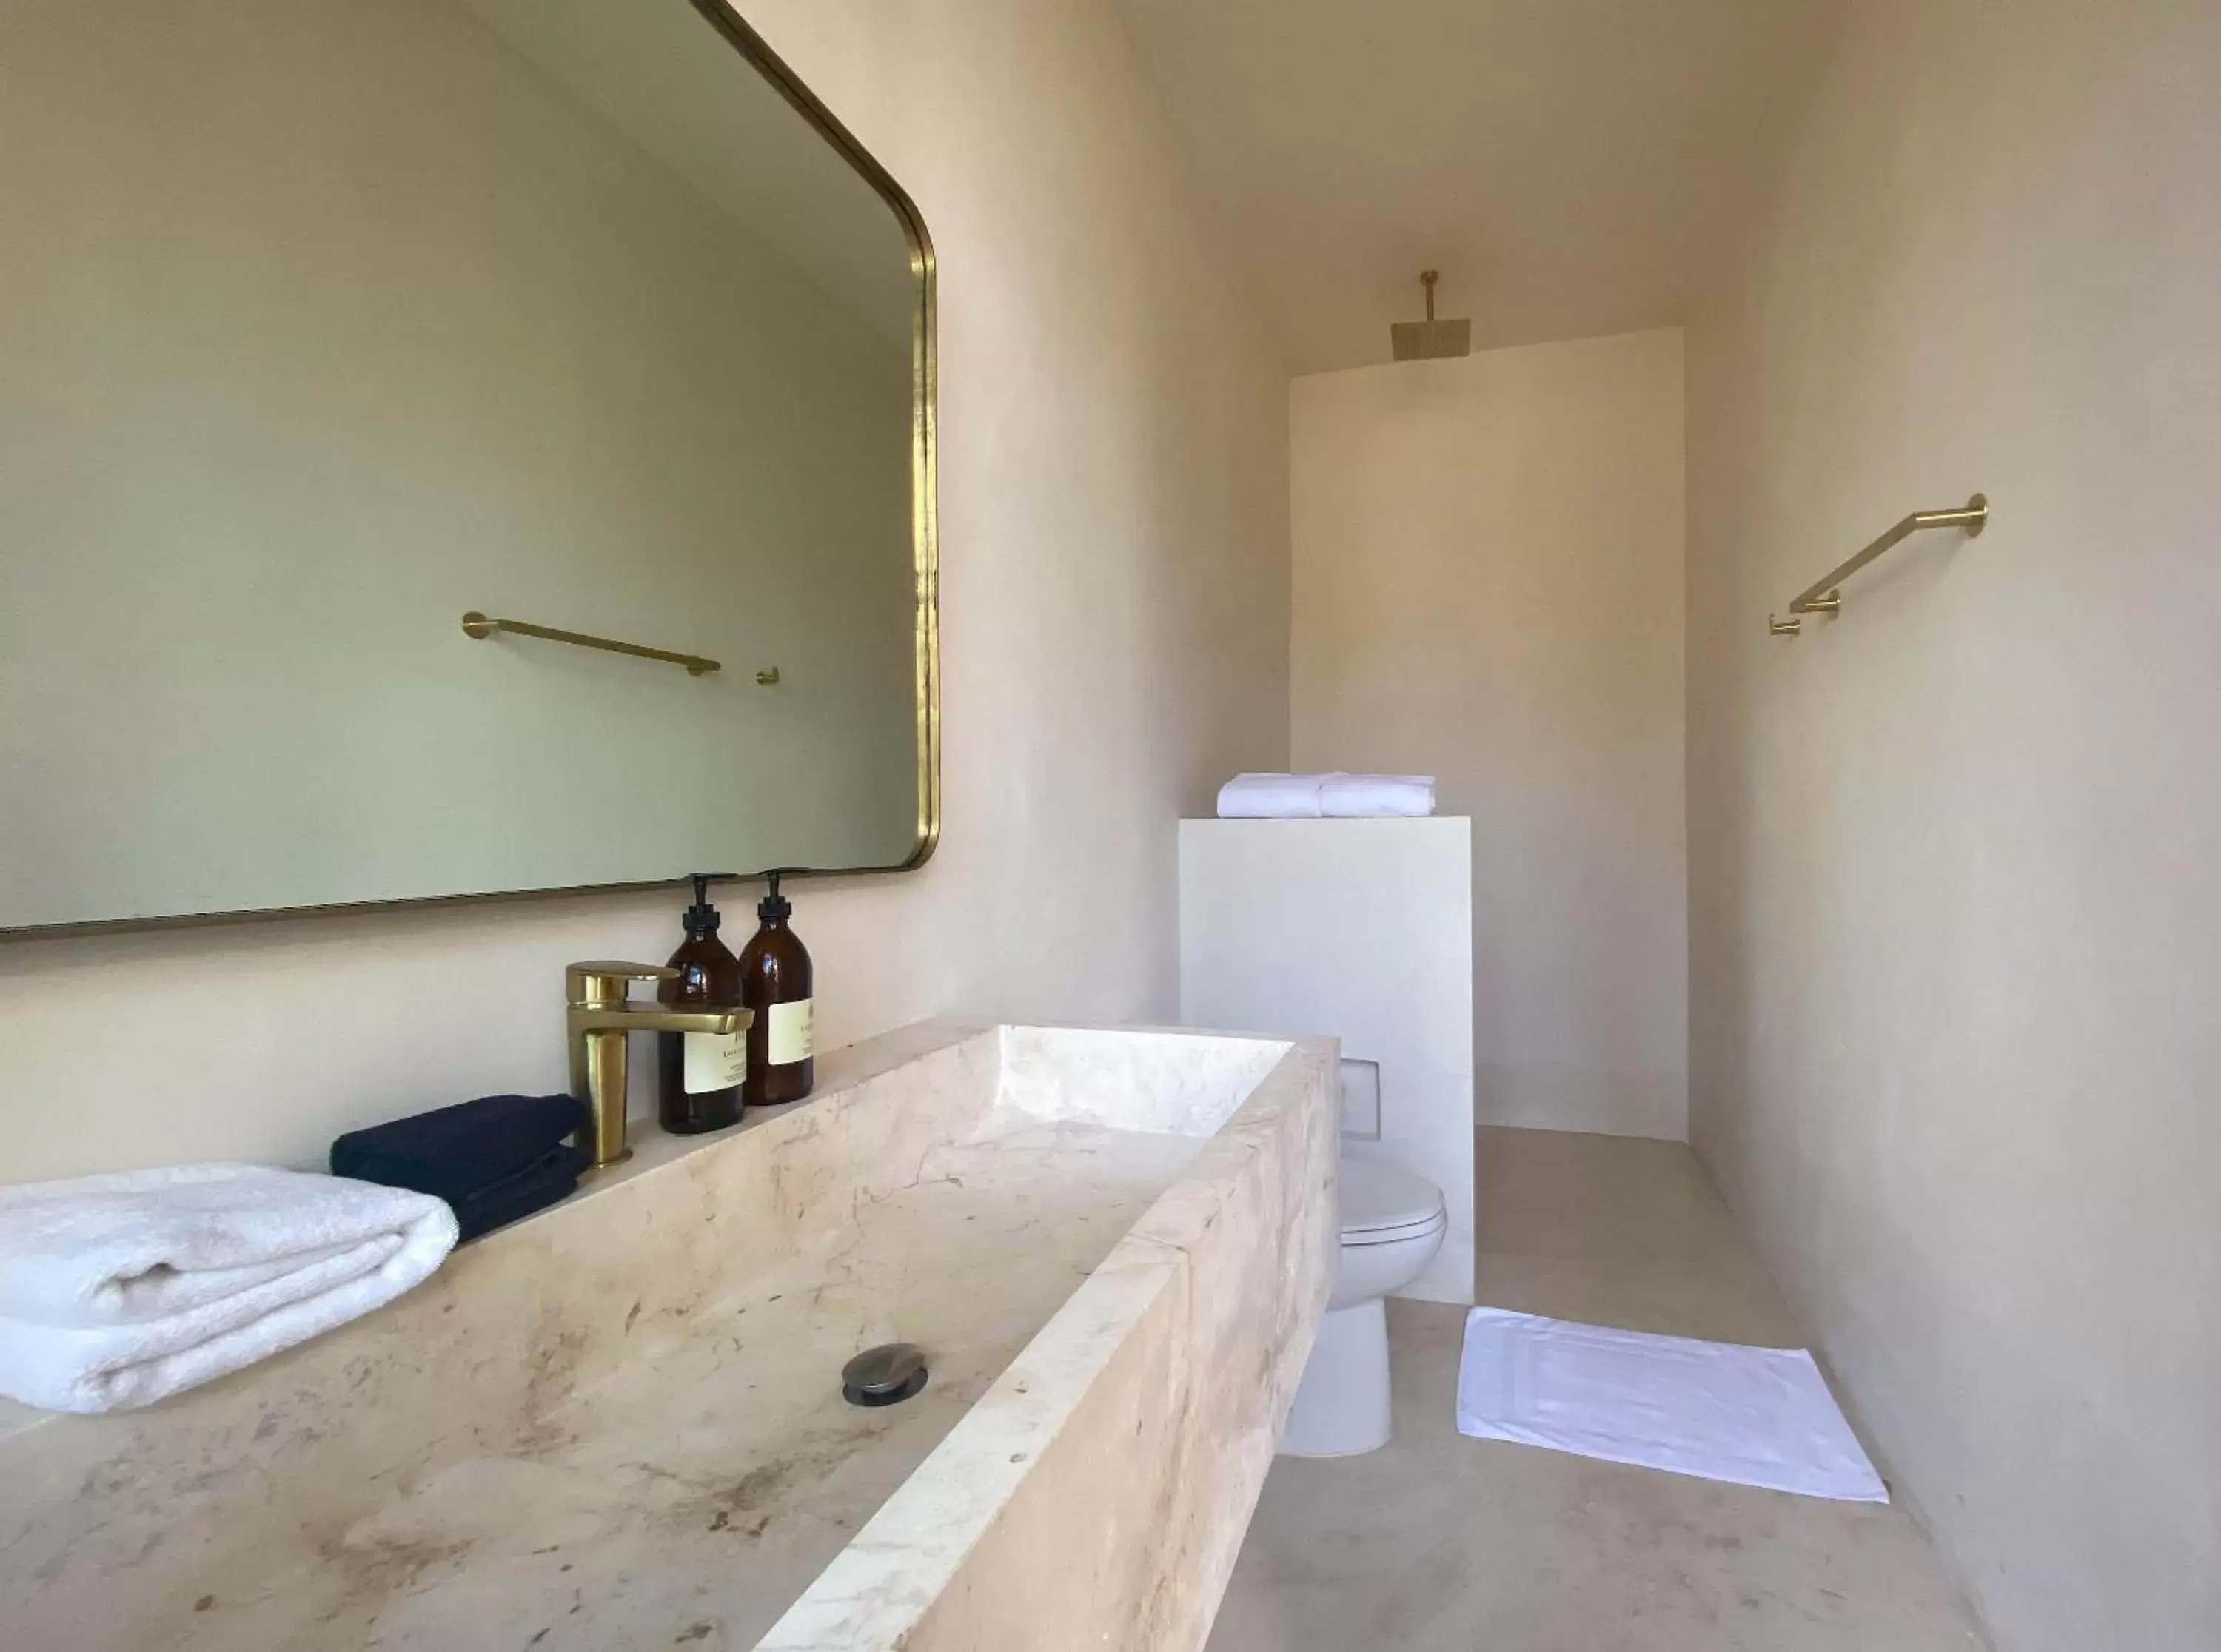 Bathroom in Hotel Panamera